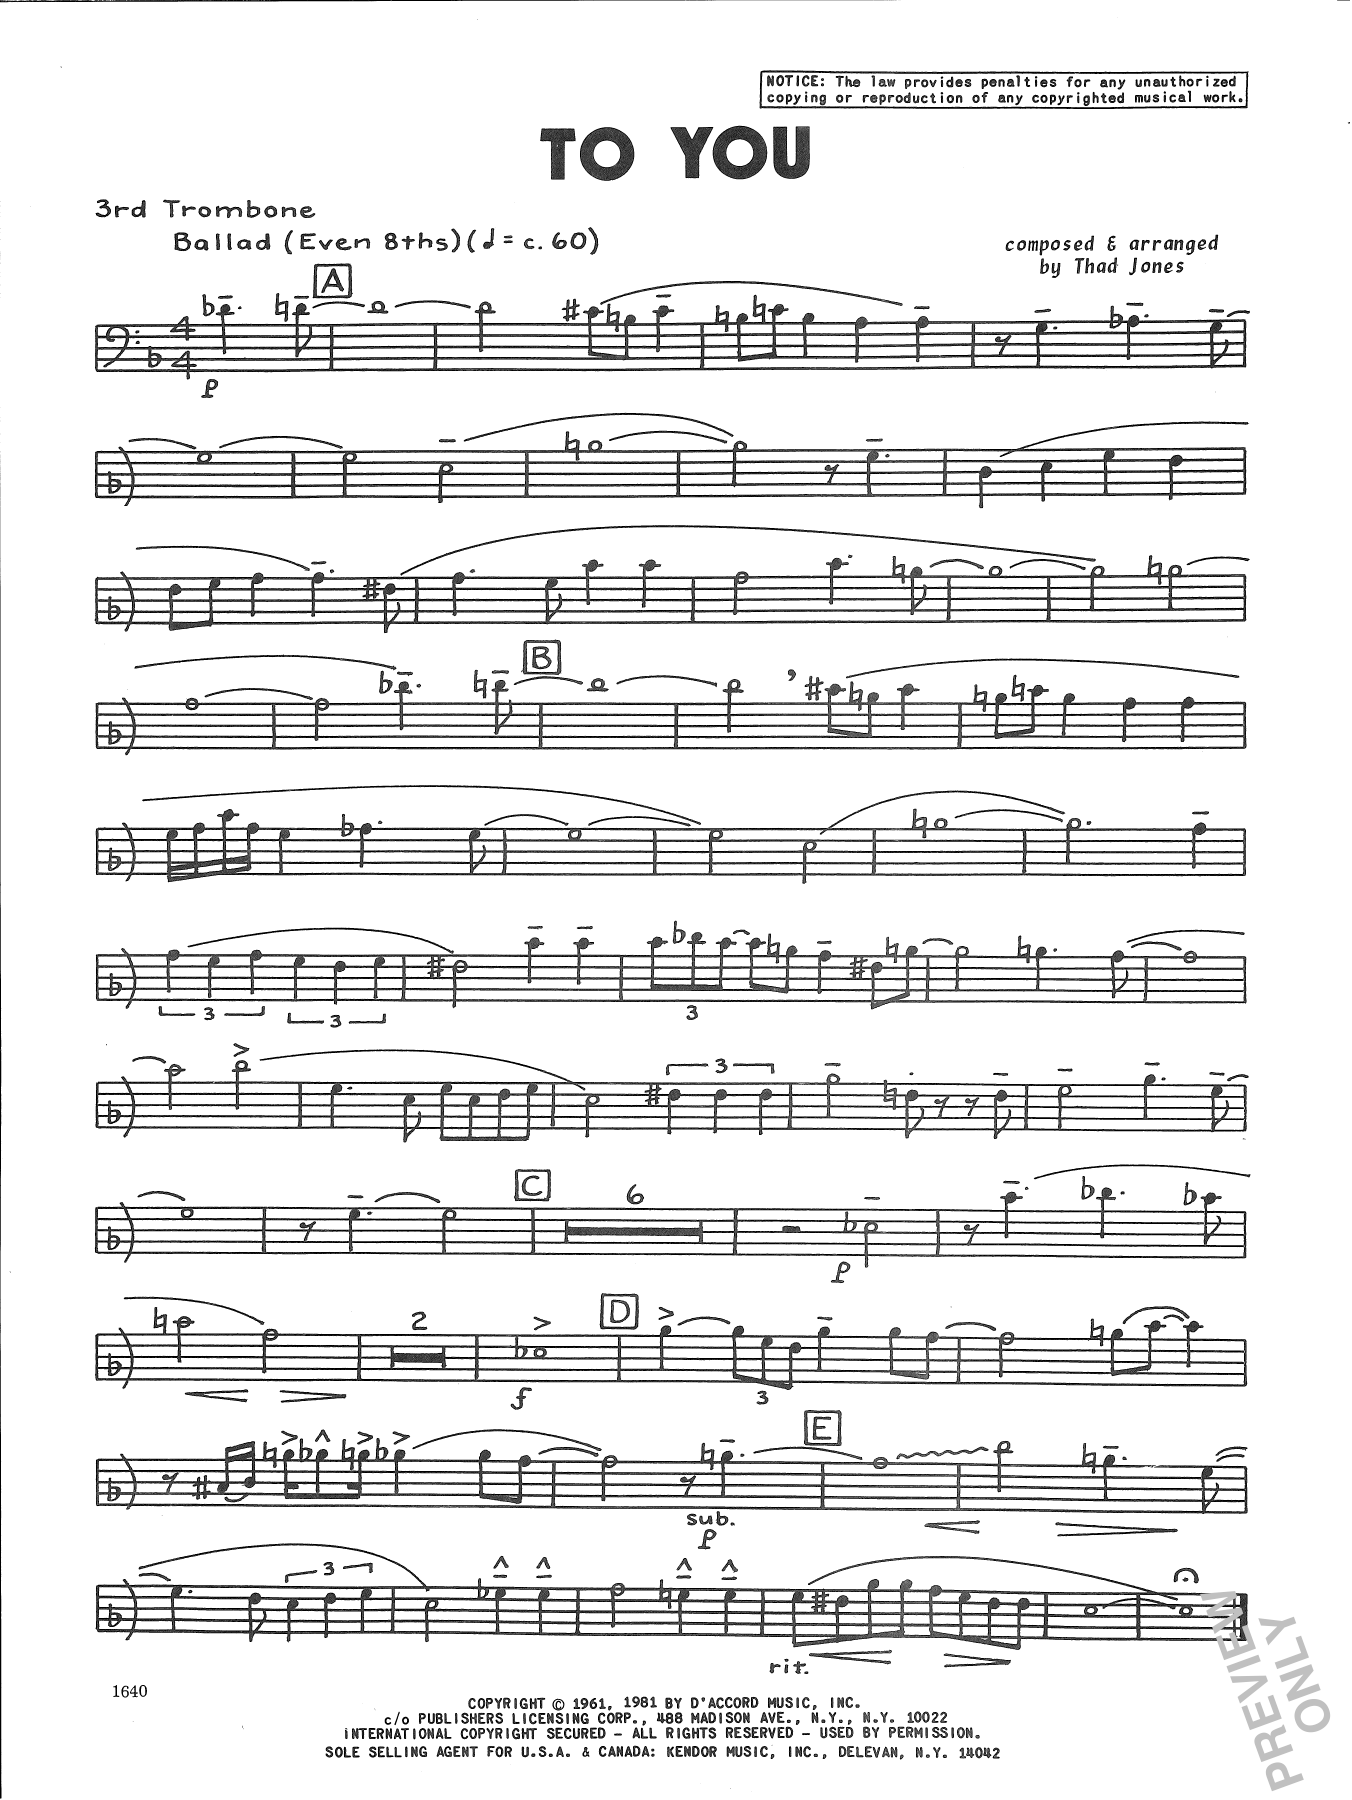 Download Thad Jones To You - 3rd Trombone Sheet Music